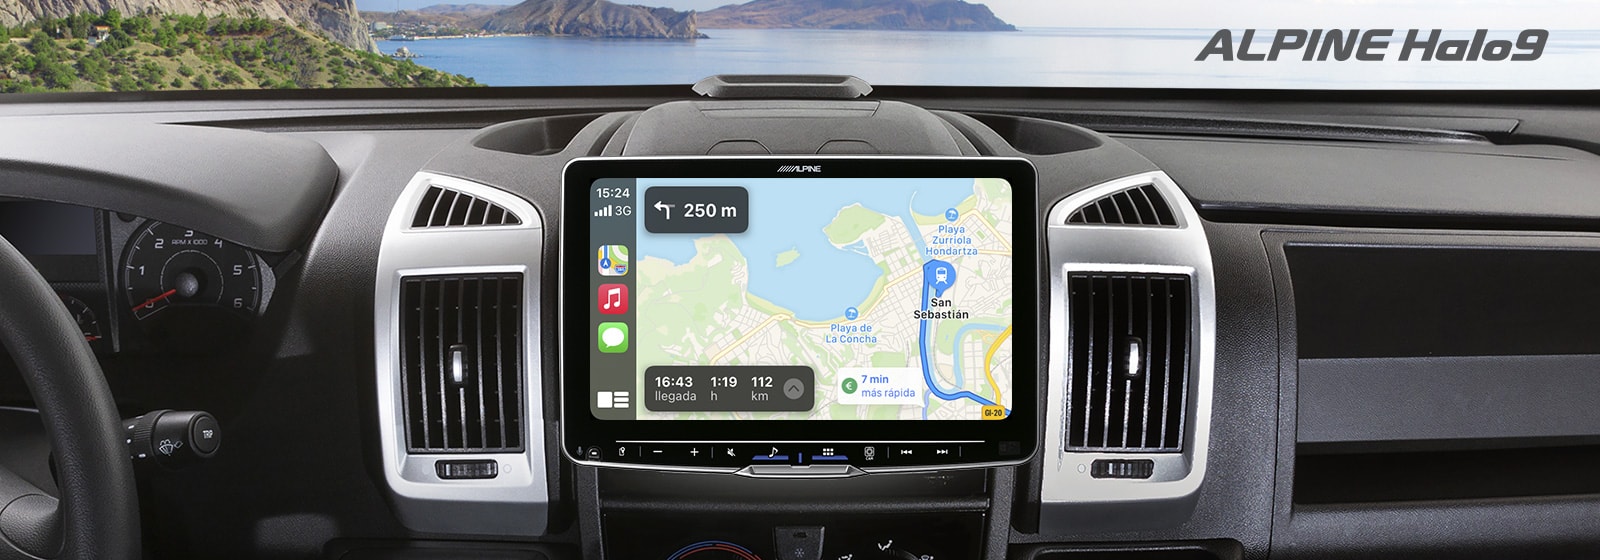 Alpine 2nd Generation Halo9 iLX-F905D DAB+ digital radio, Apple CarPlay and Android Auto